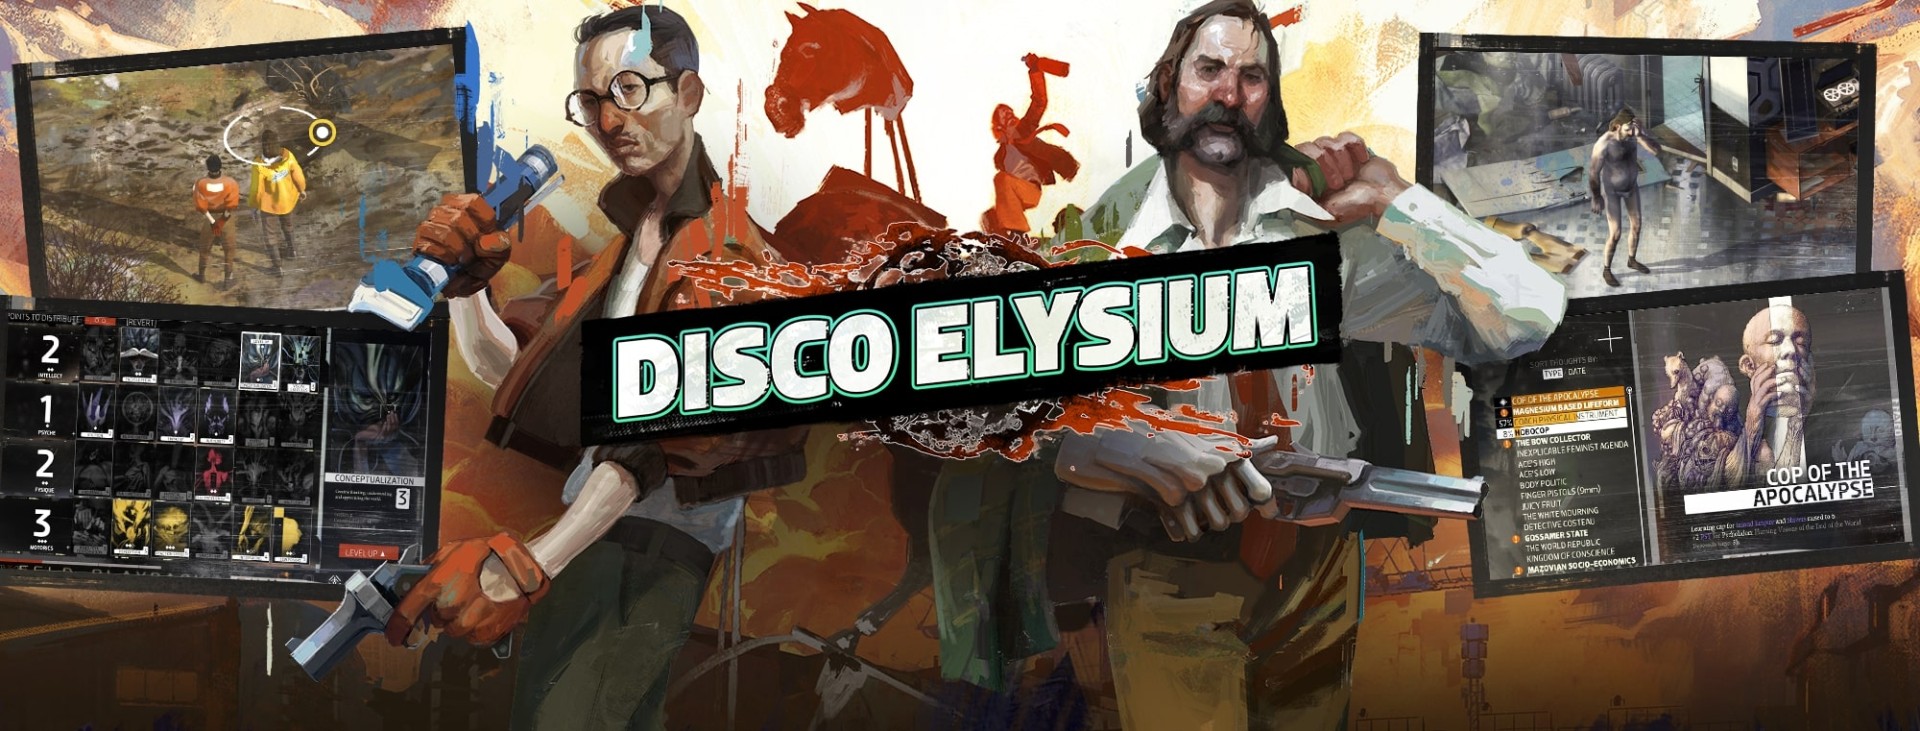 Disco Elysium poster